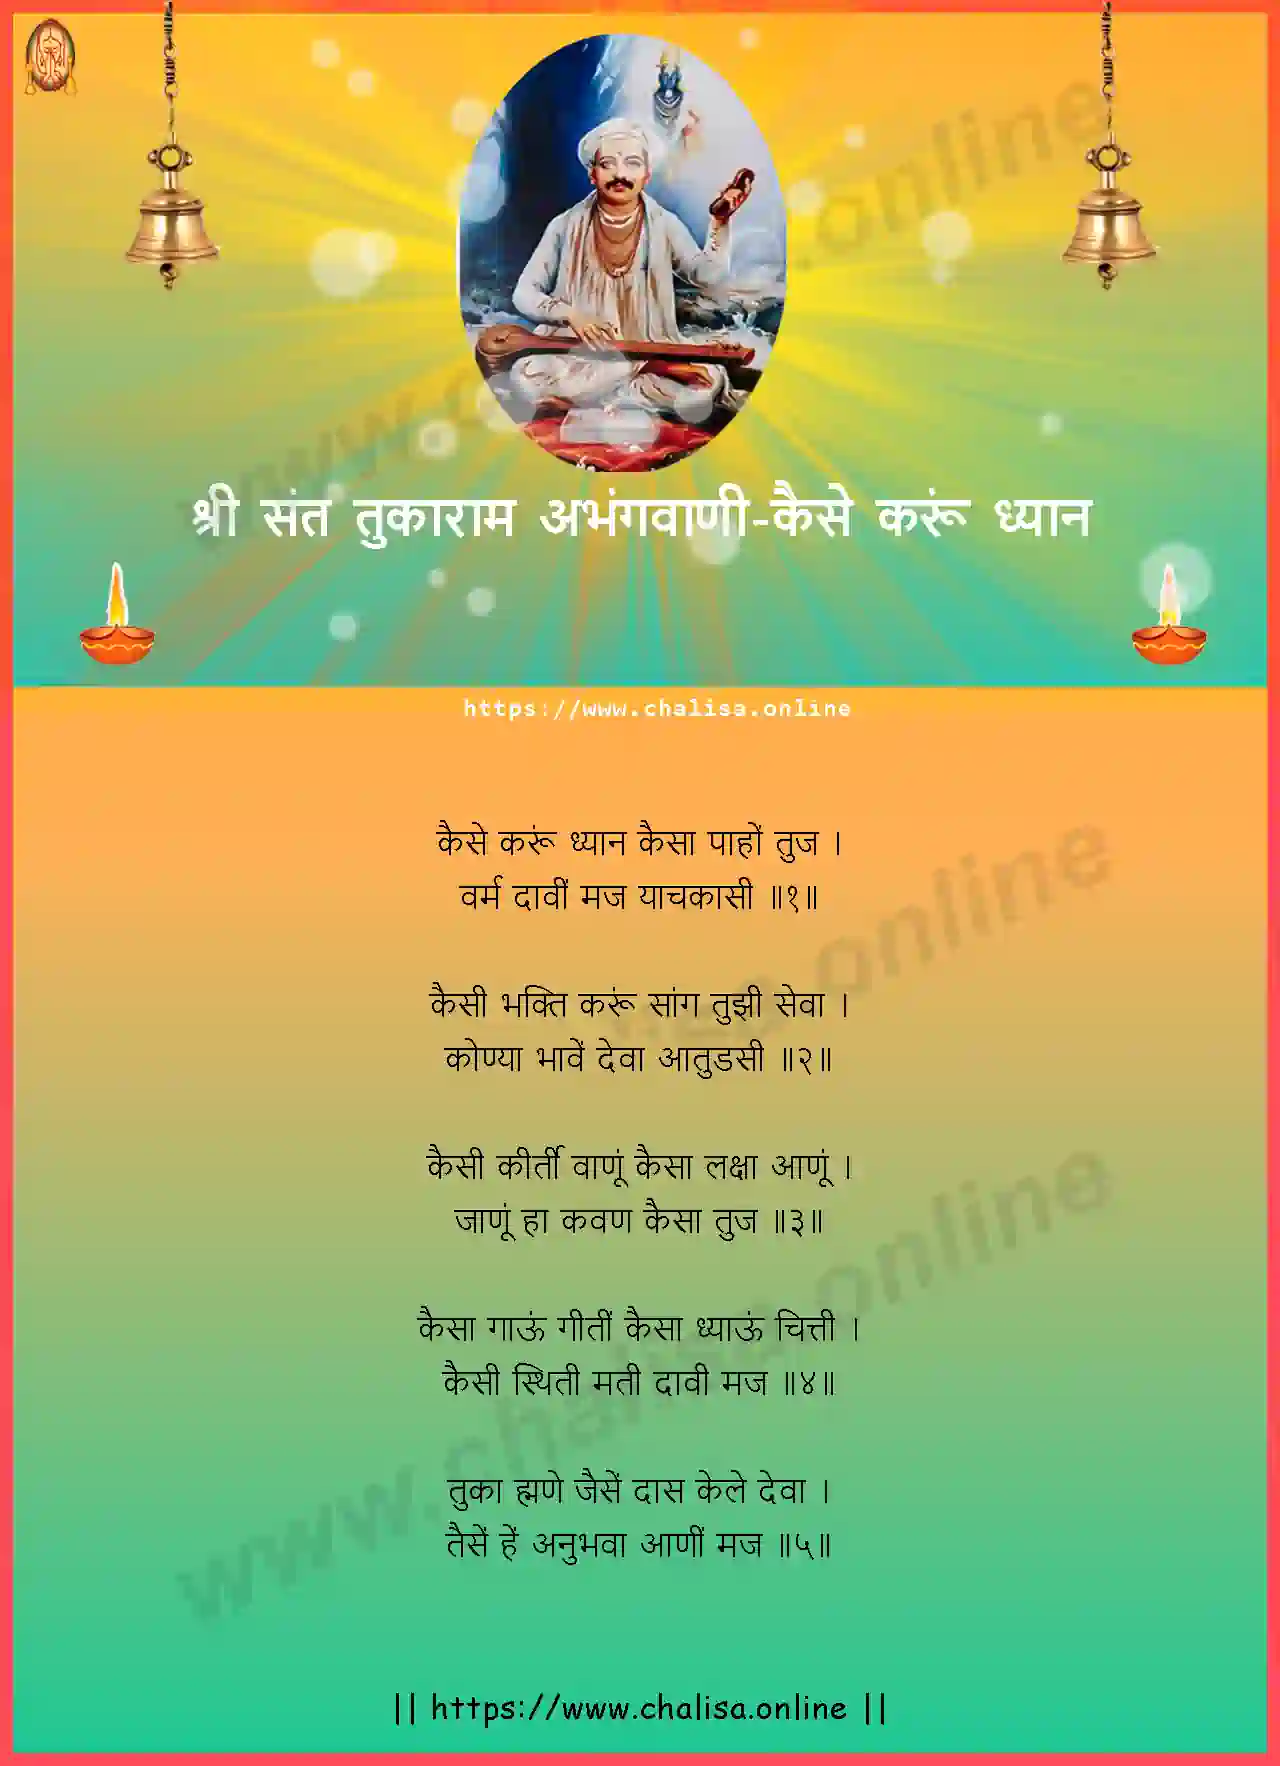 kaise-karu-dhyan-shri-sant-tukaram-abhang-marathi-lyrics-download